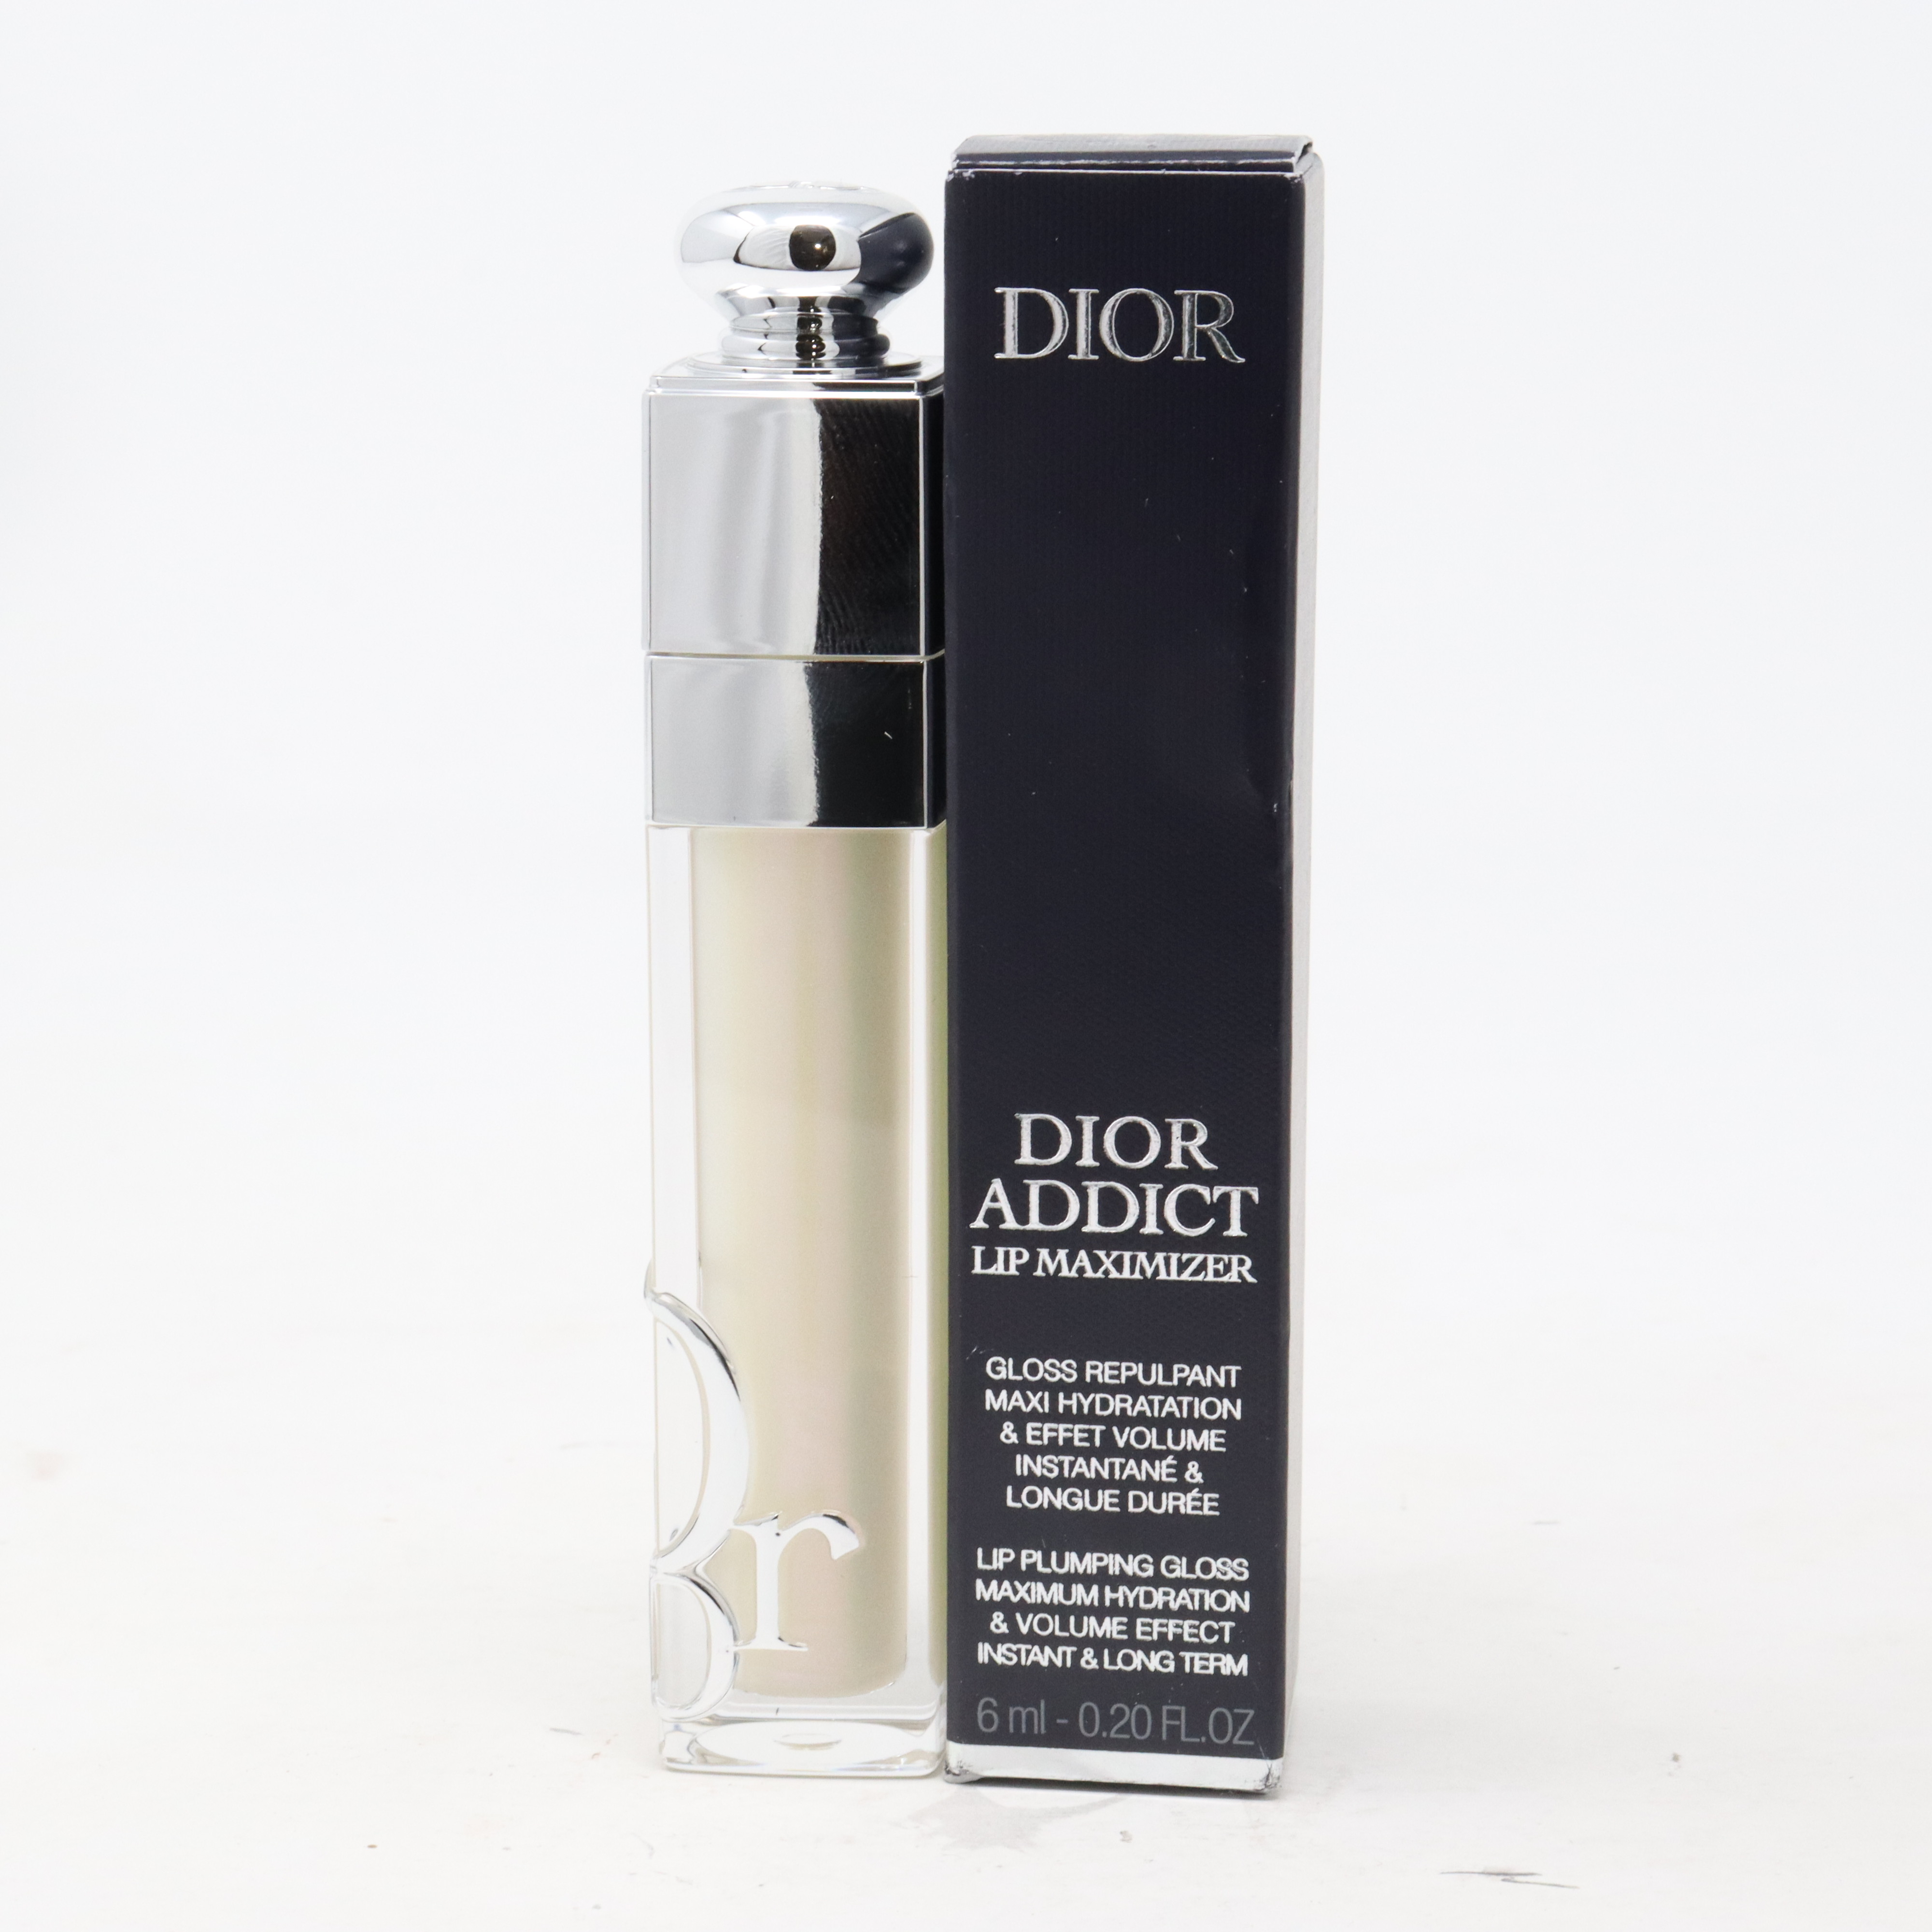 Dior Addict Lip Maximizer: Hydrating and Plumping Gloss